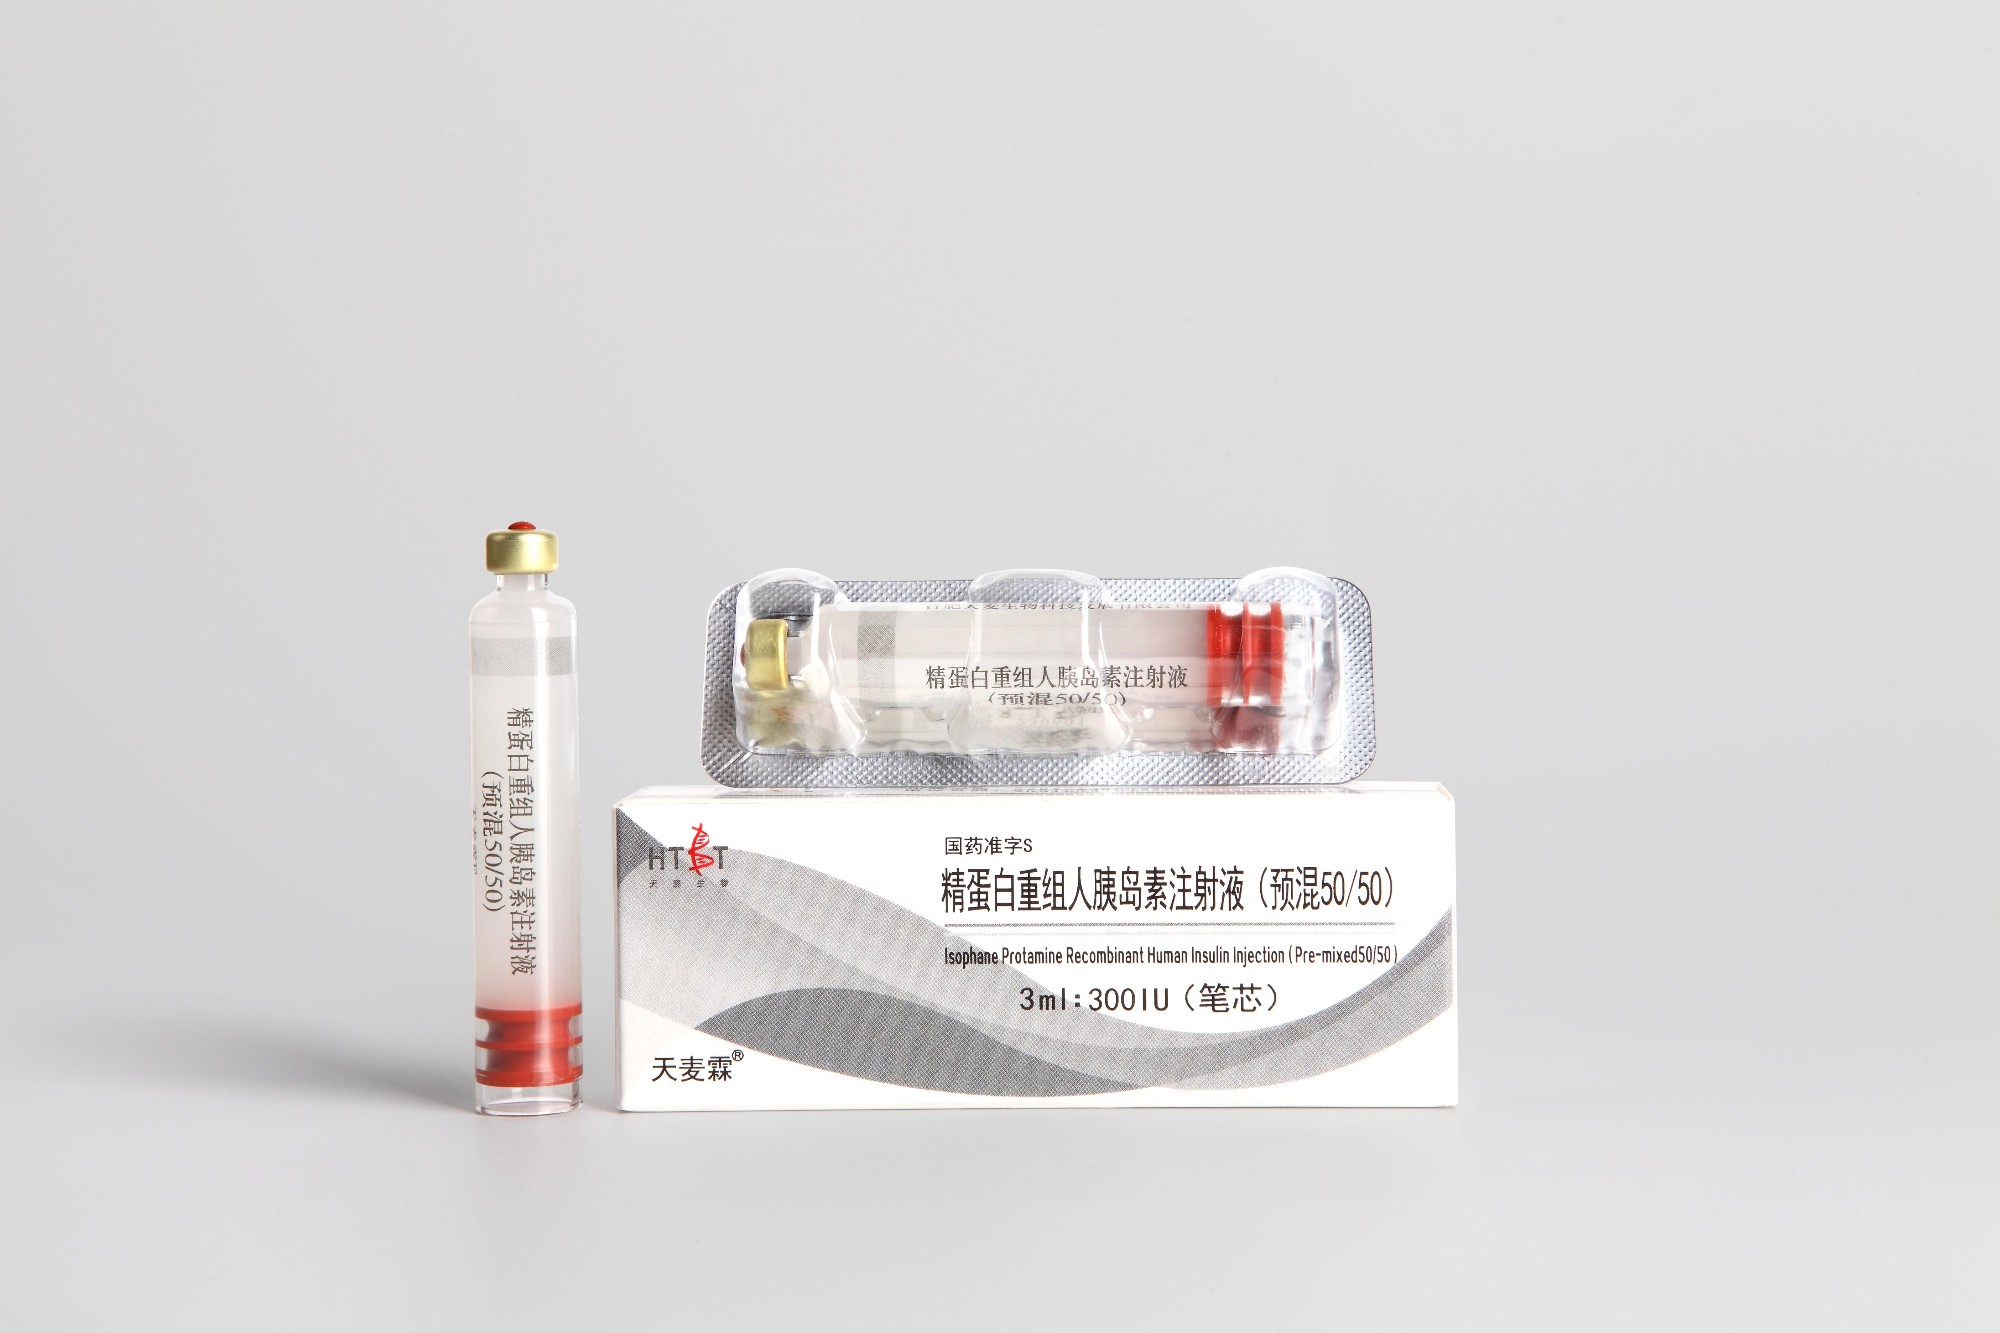  Isophane Protamine Recombinant Human Insulin Injection（Pre-mixed50/50）